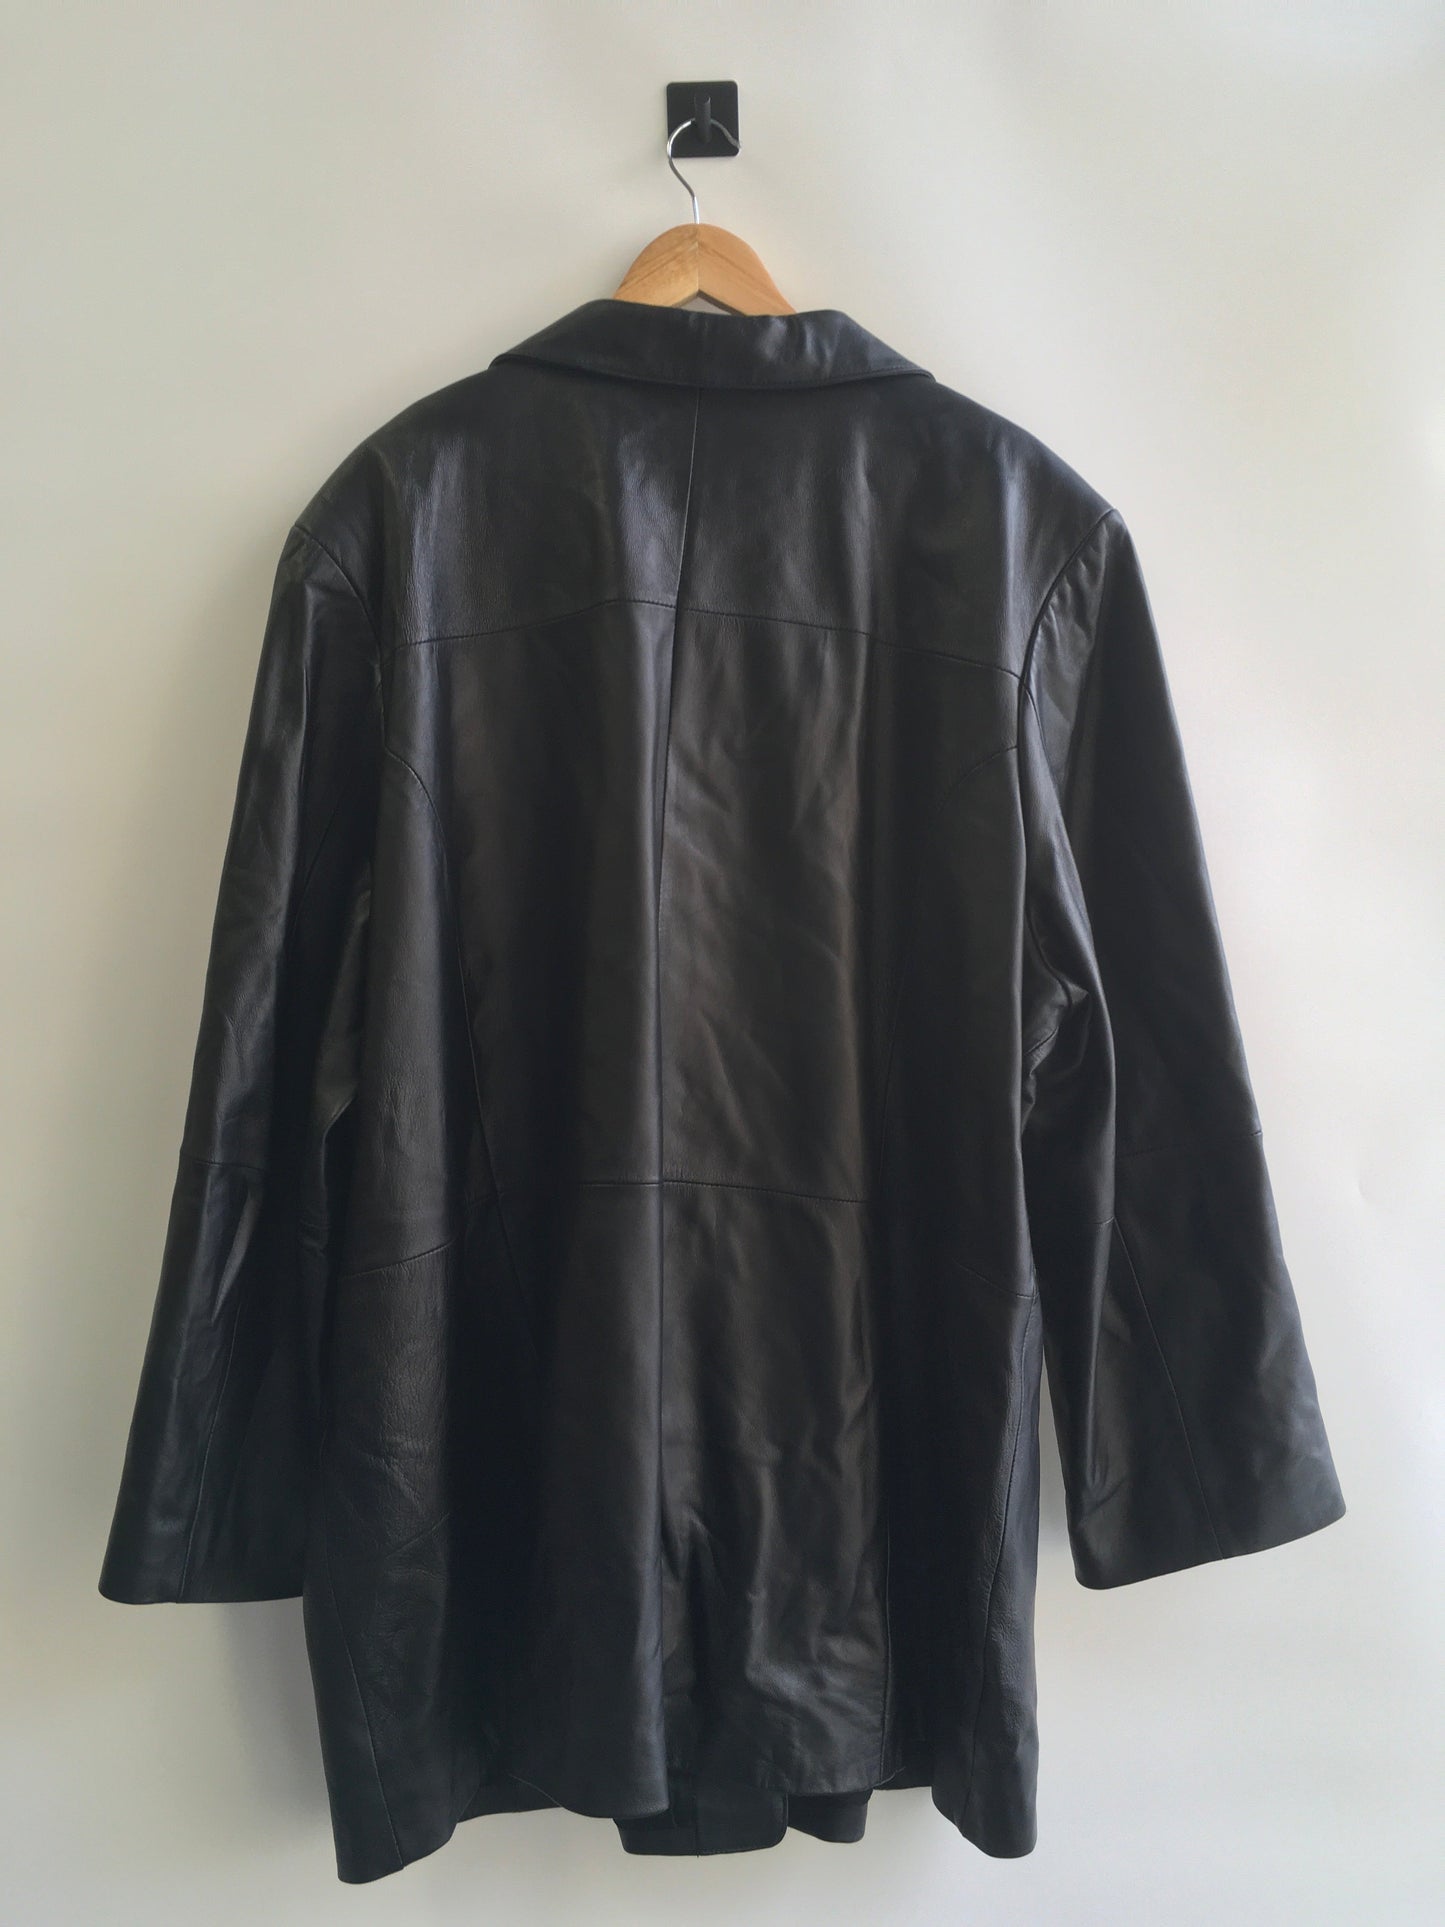 Jacket Leather By Avenue  Size: 26